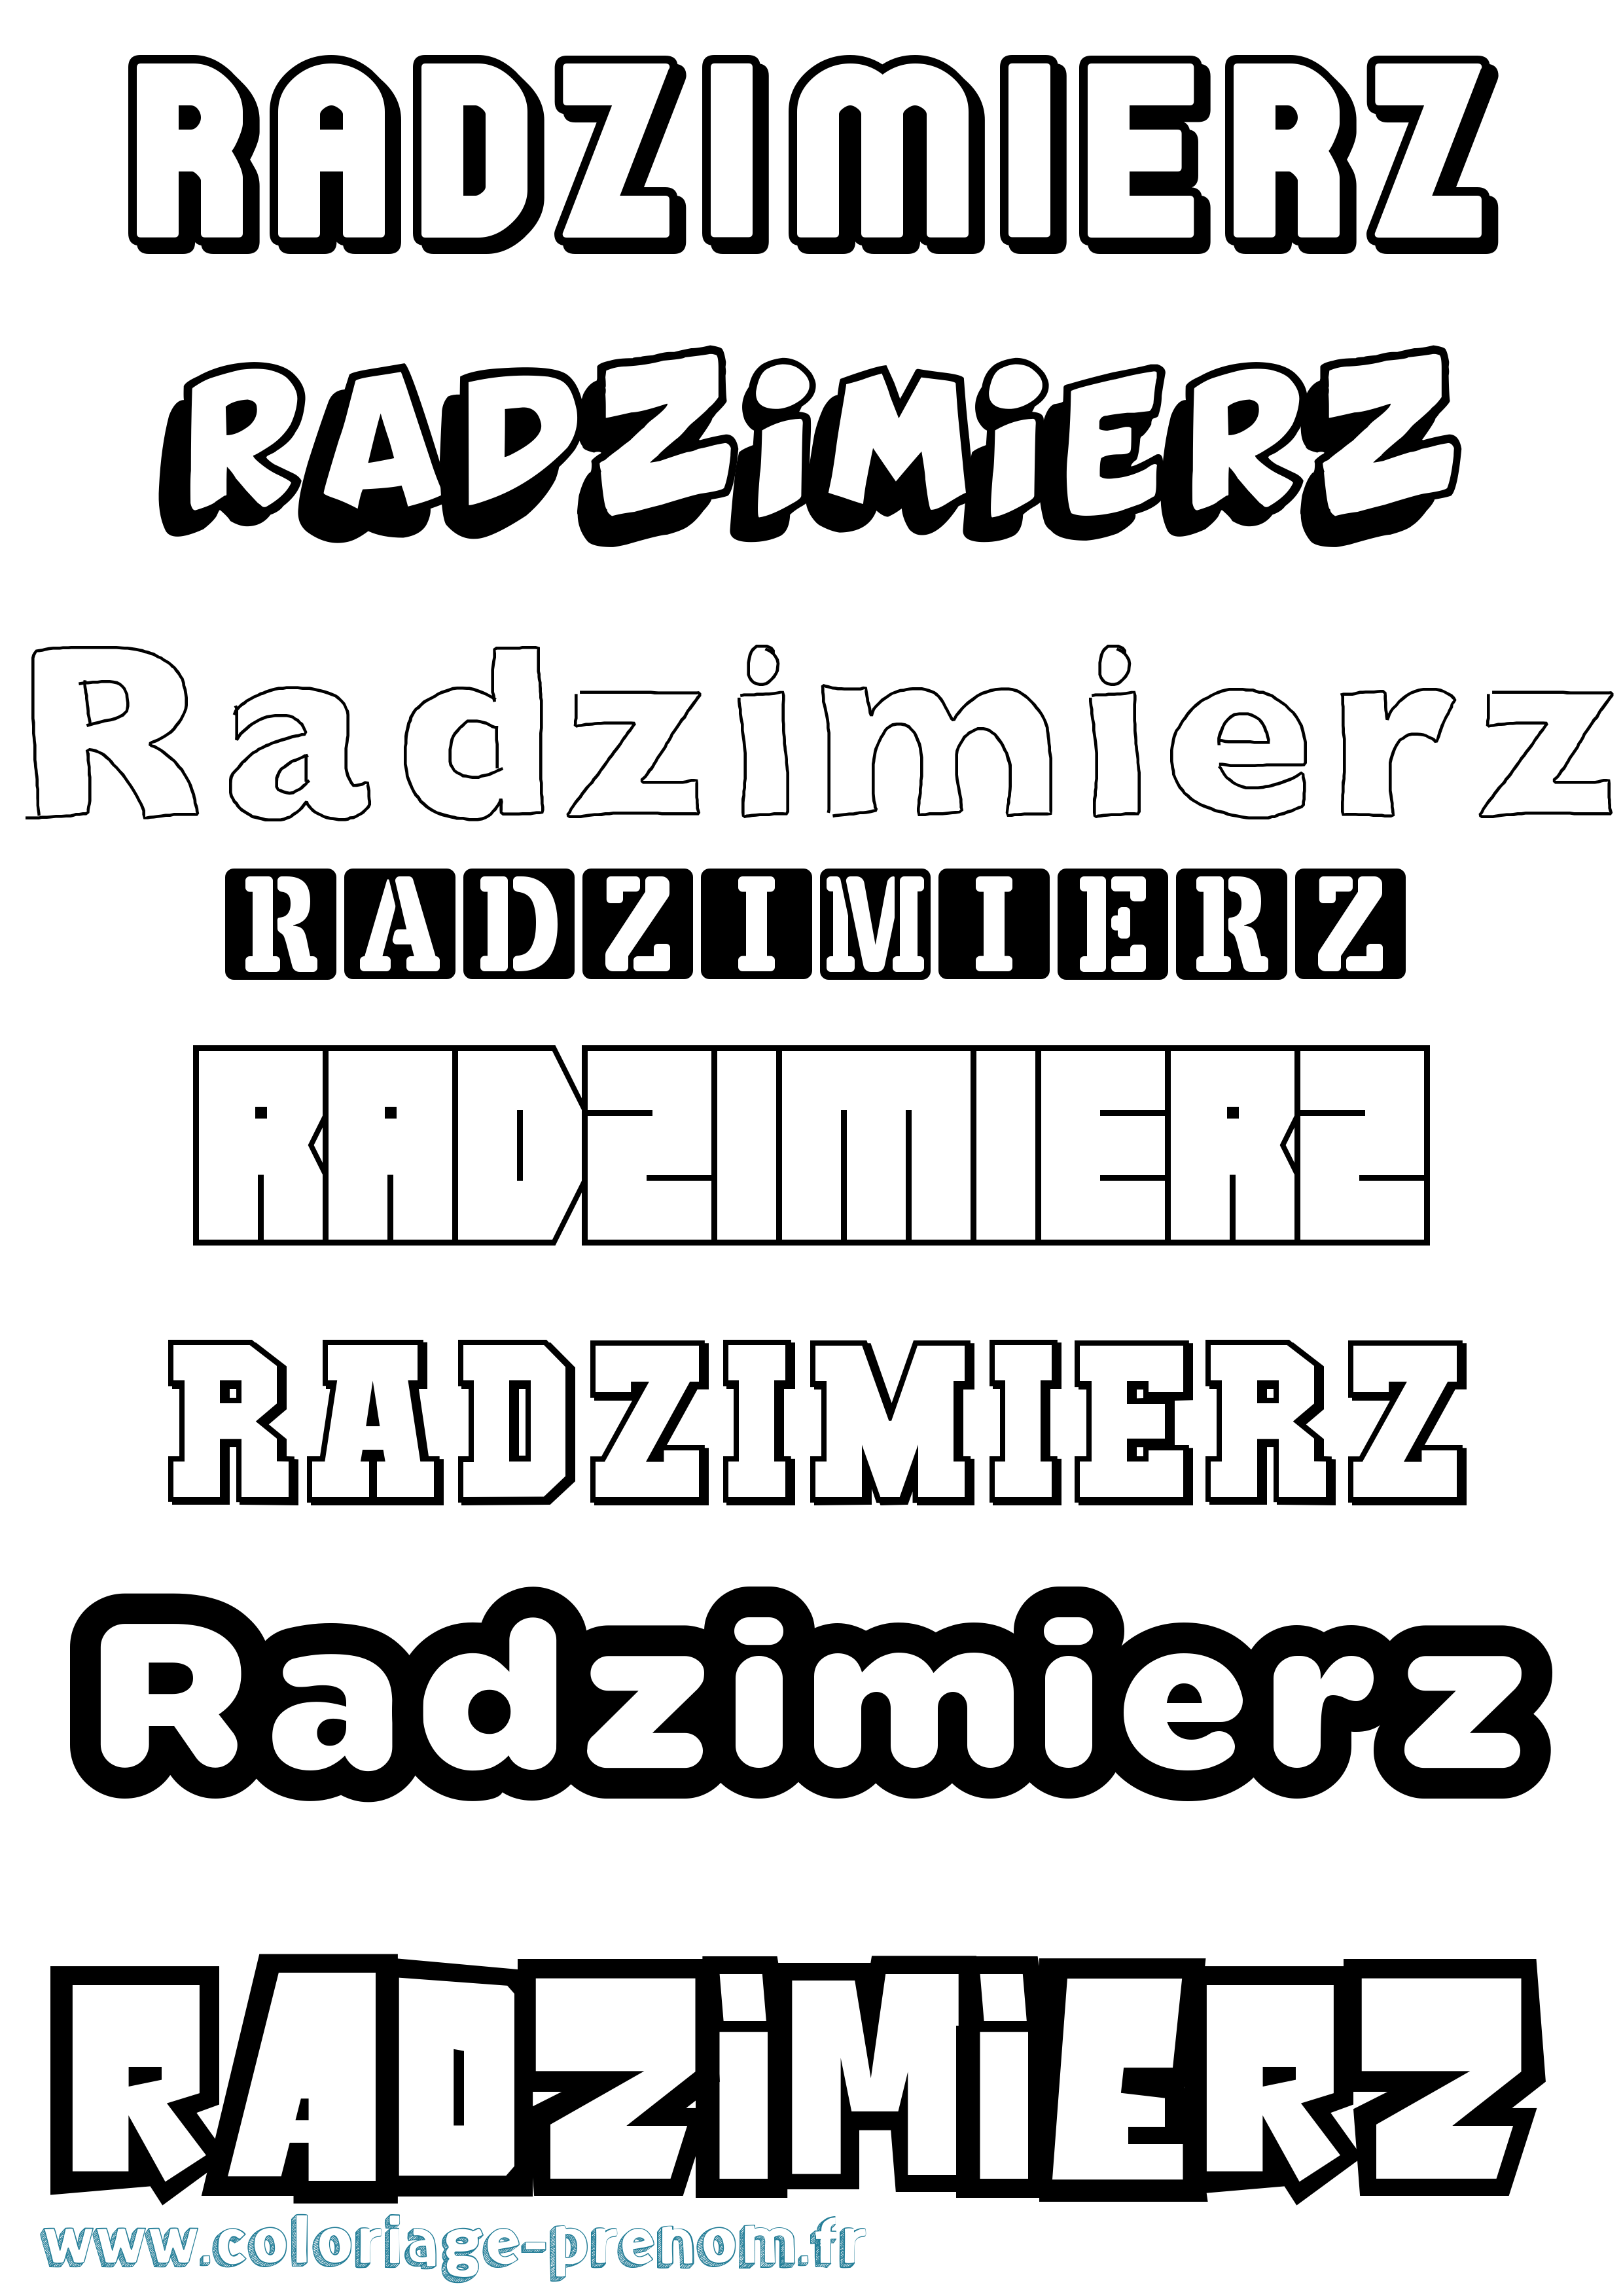 Coloriage prénom Radzimierz Simple